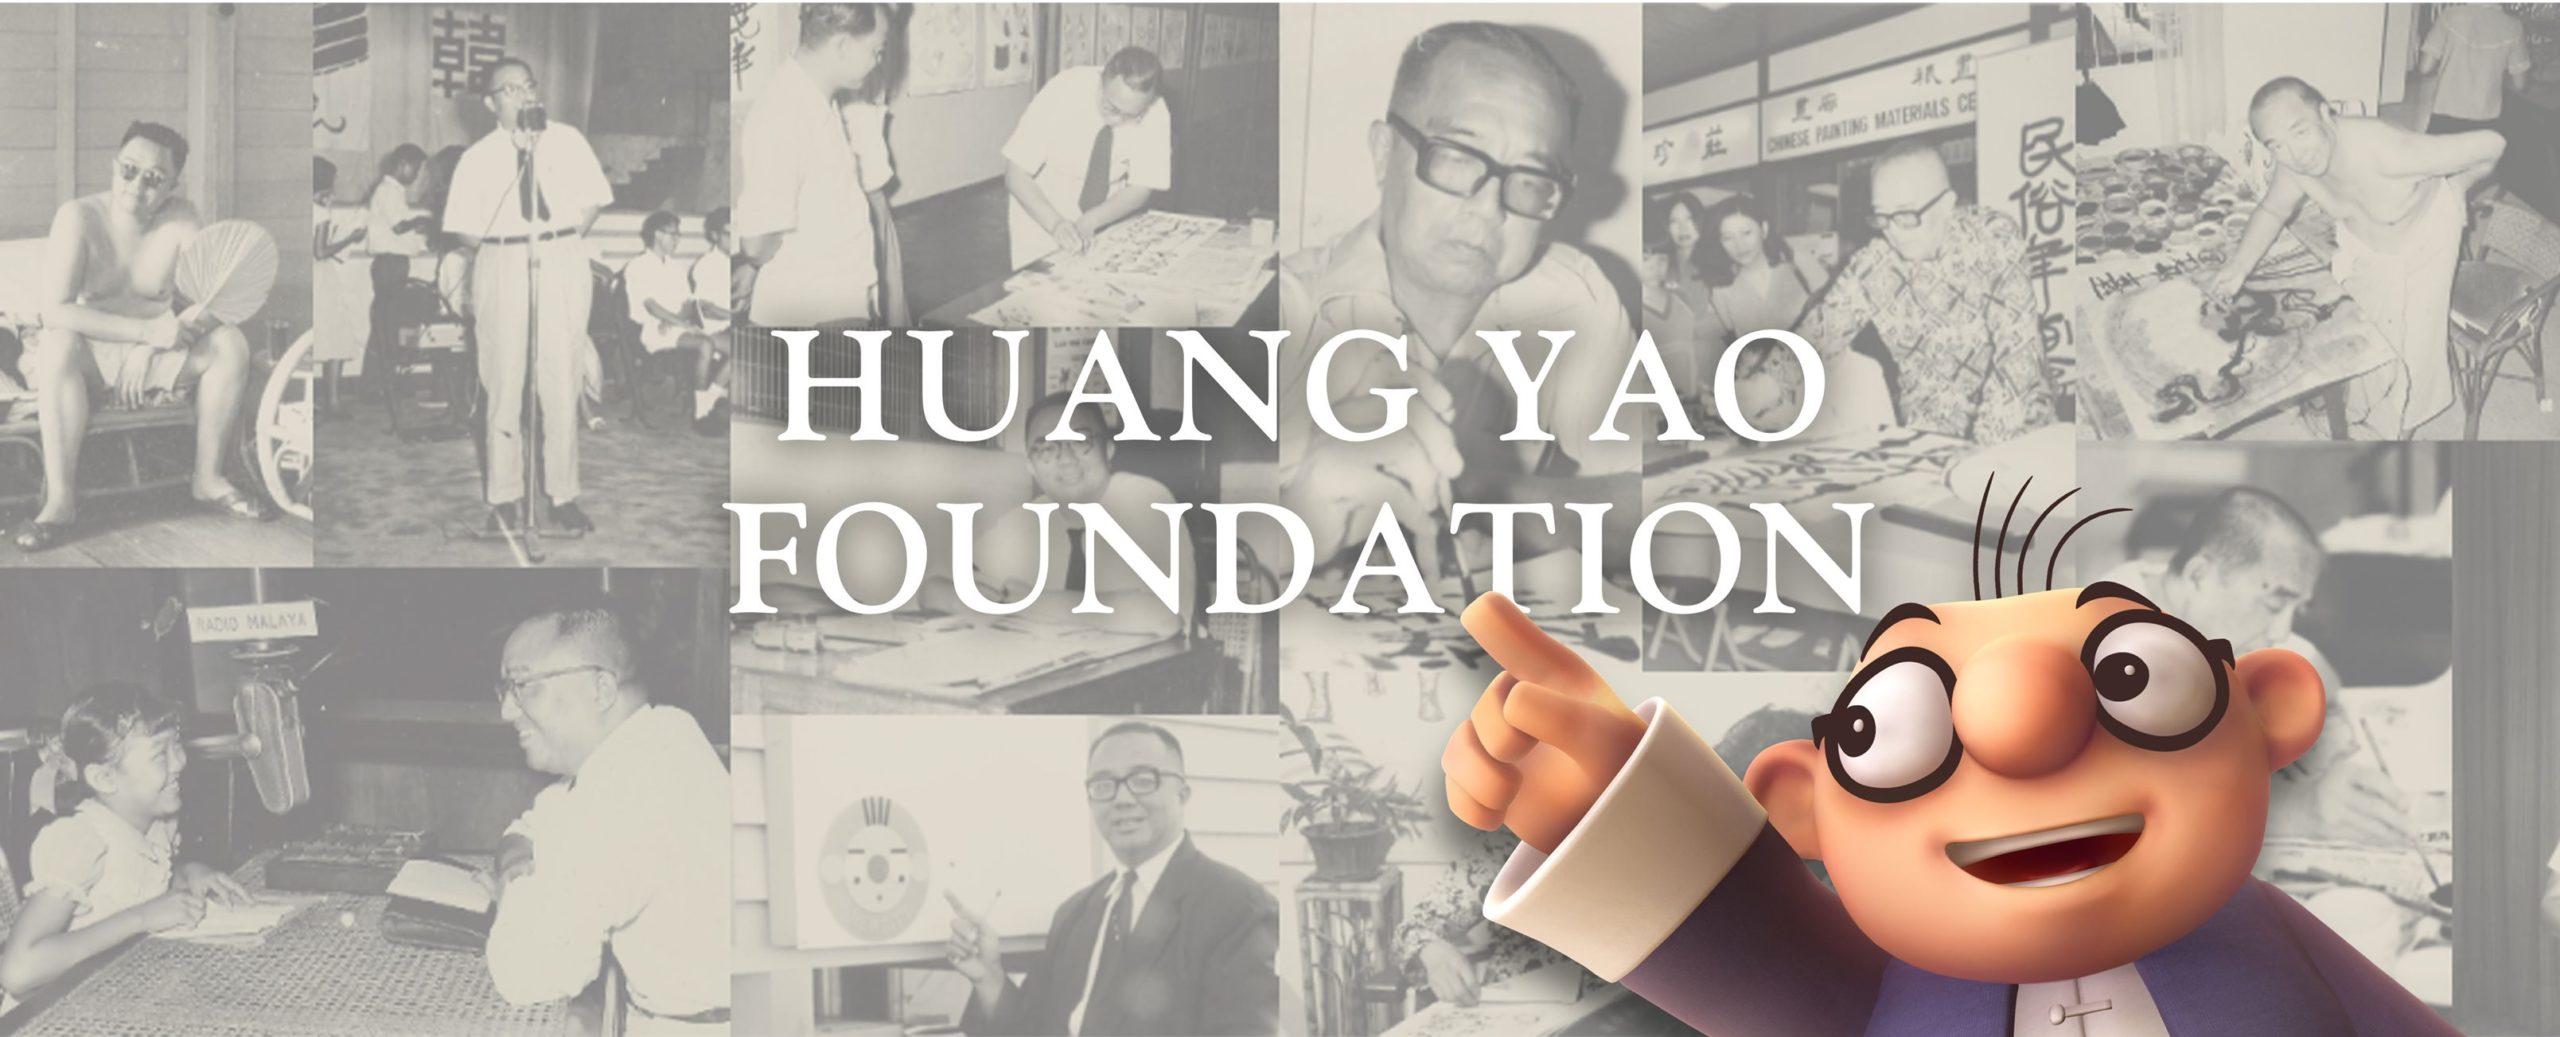 huang yao foundation poster